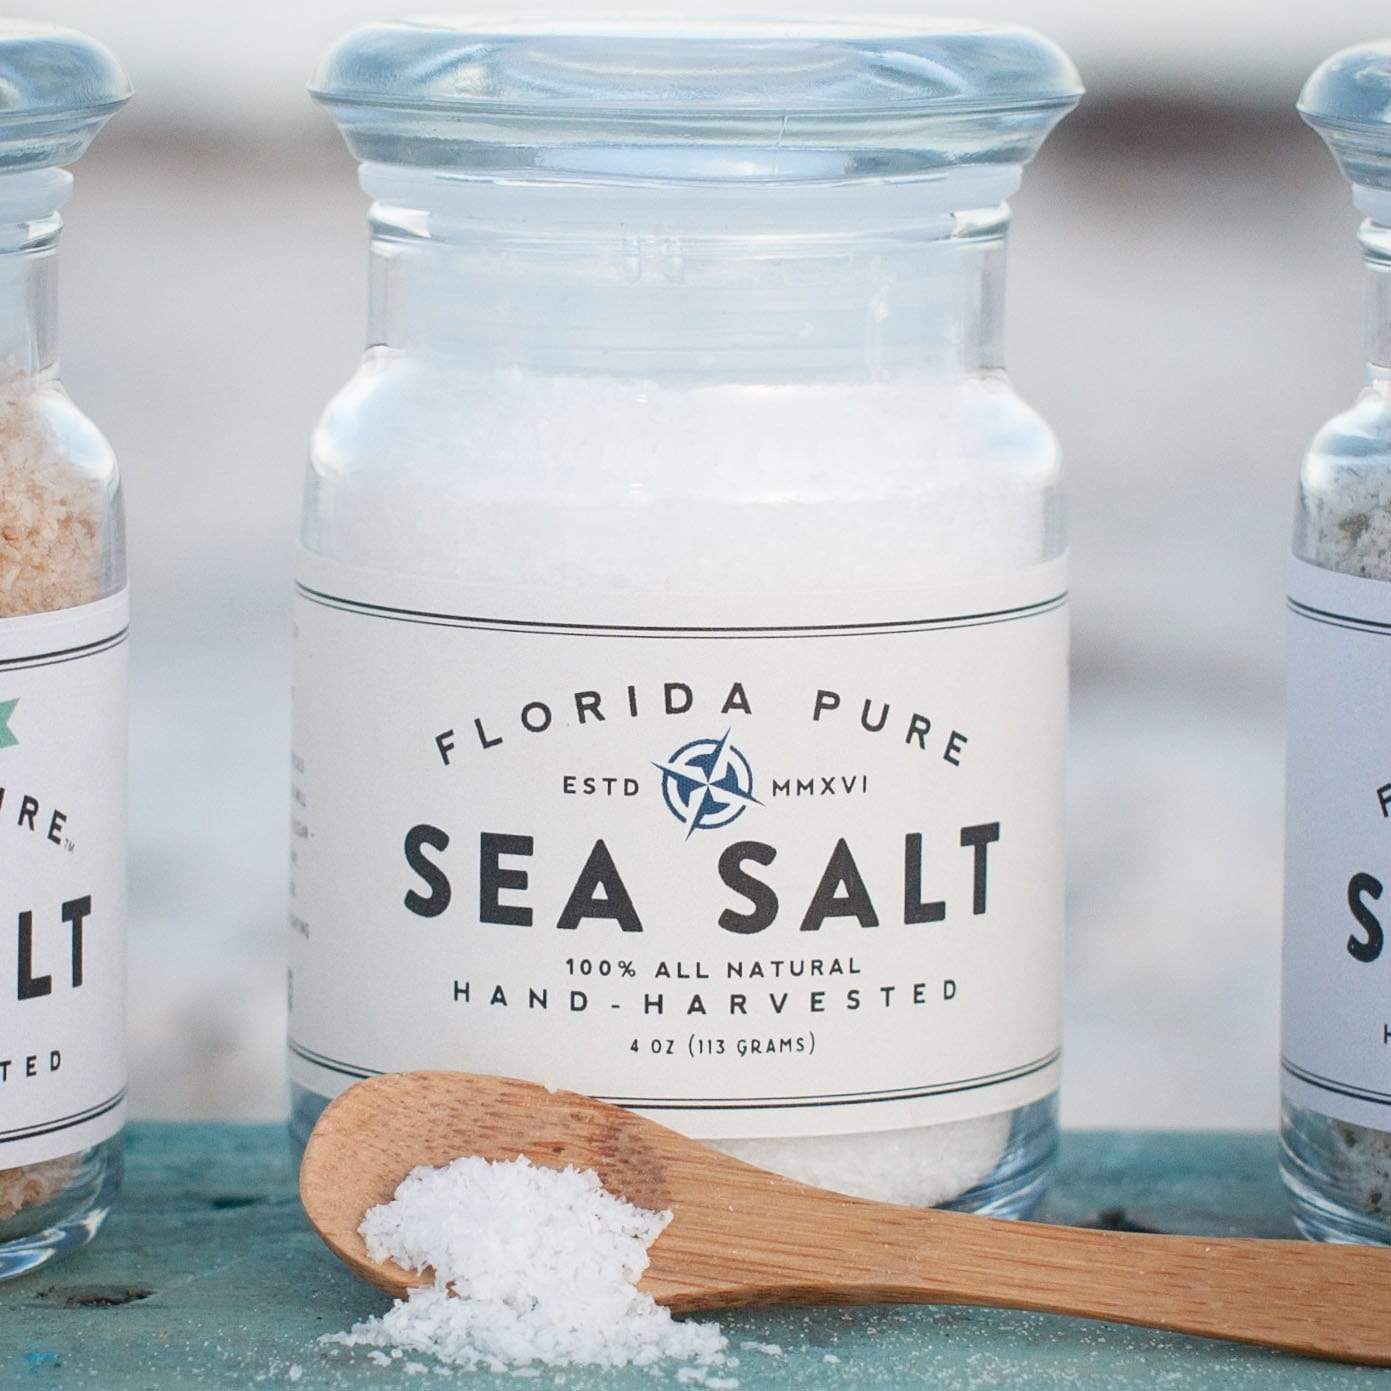 Florida Pure Florida Pure 100% All Natural Hand - Harvested Sea Salt 4 oz